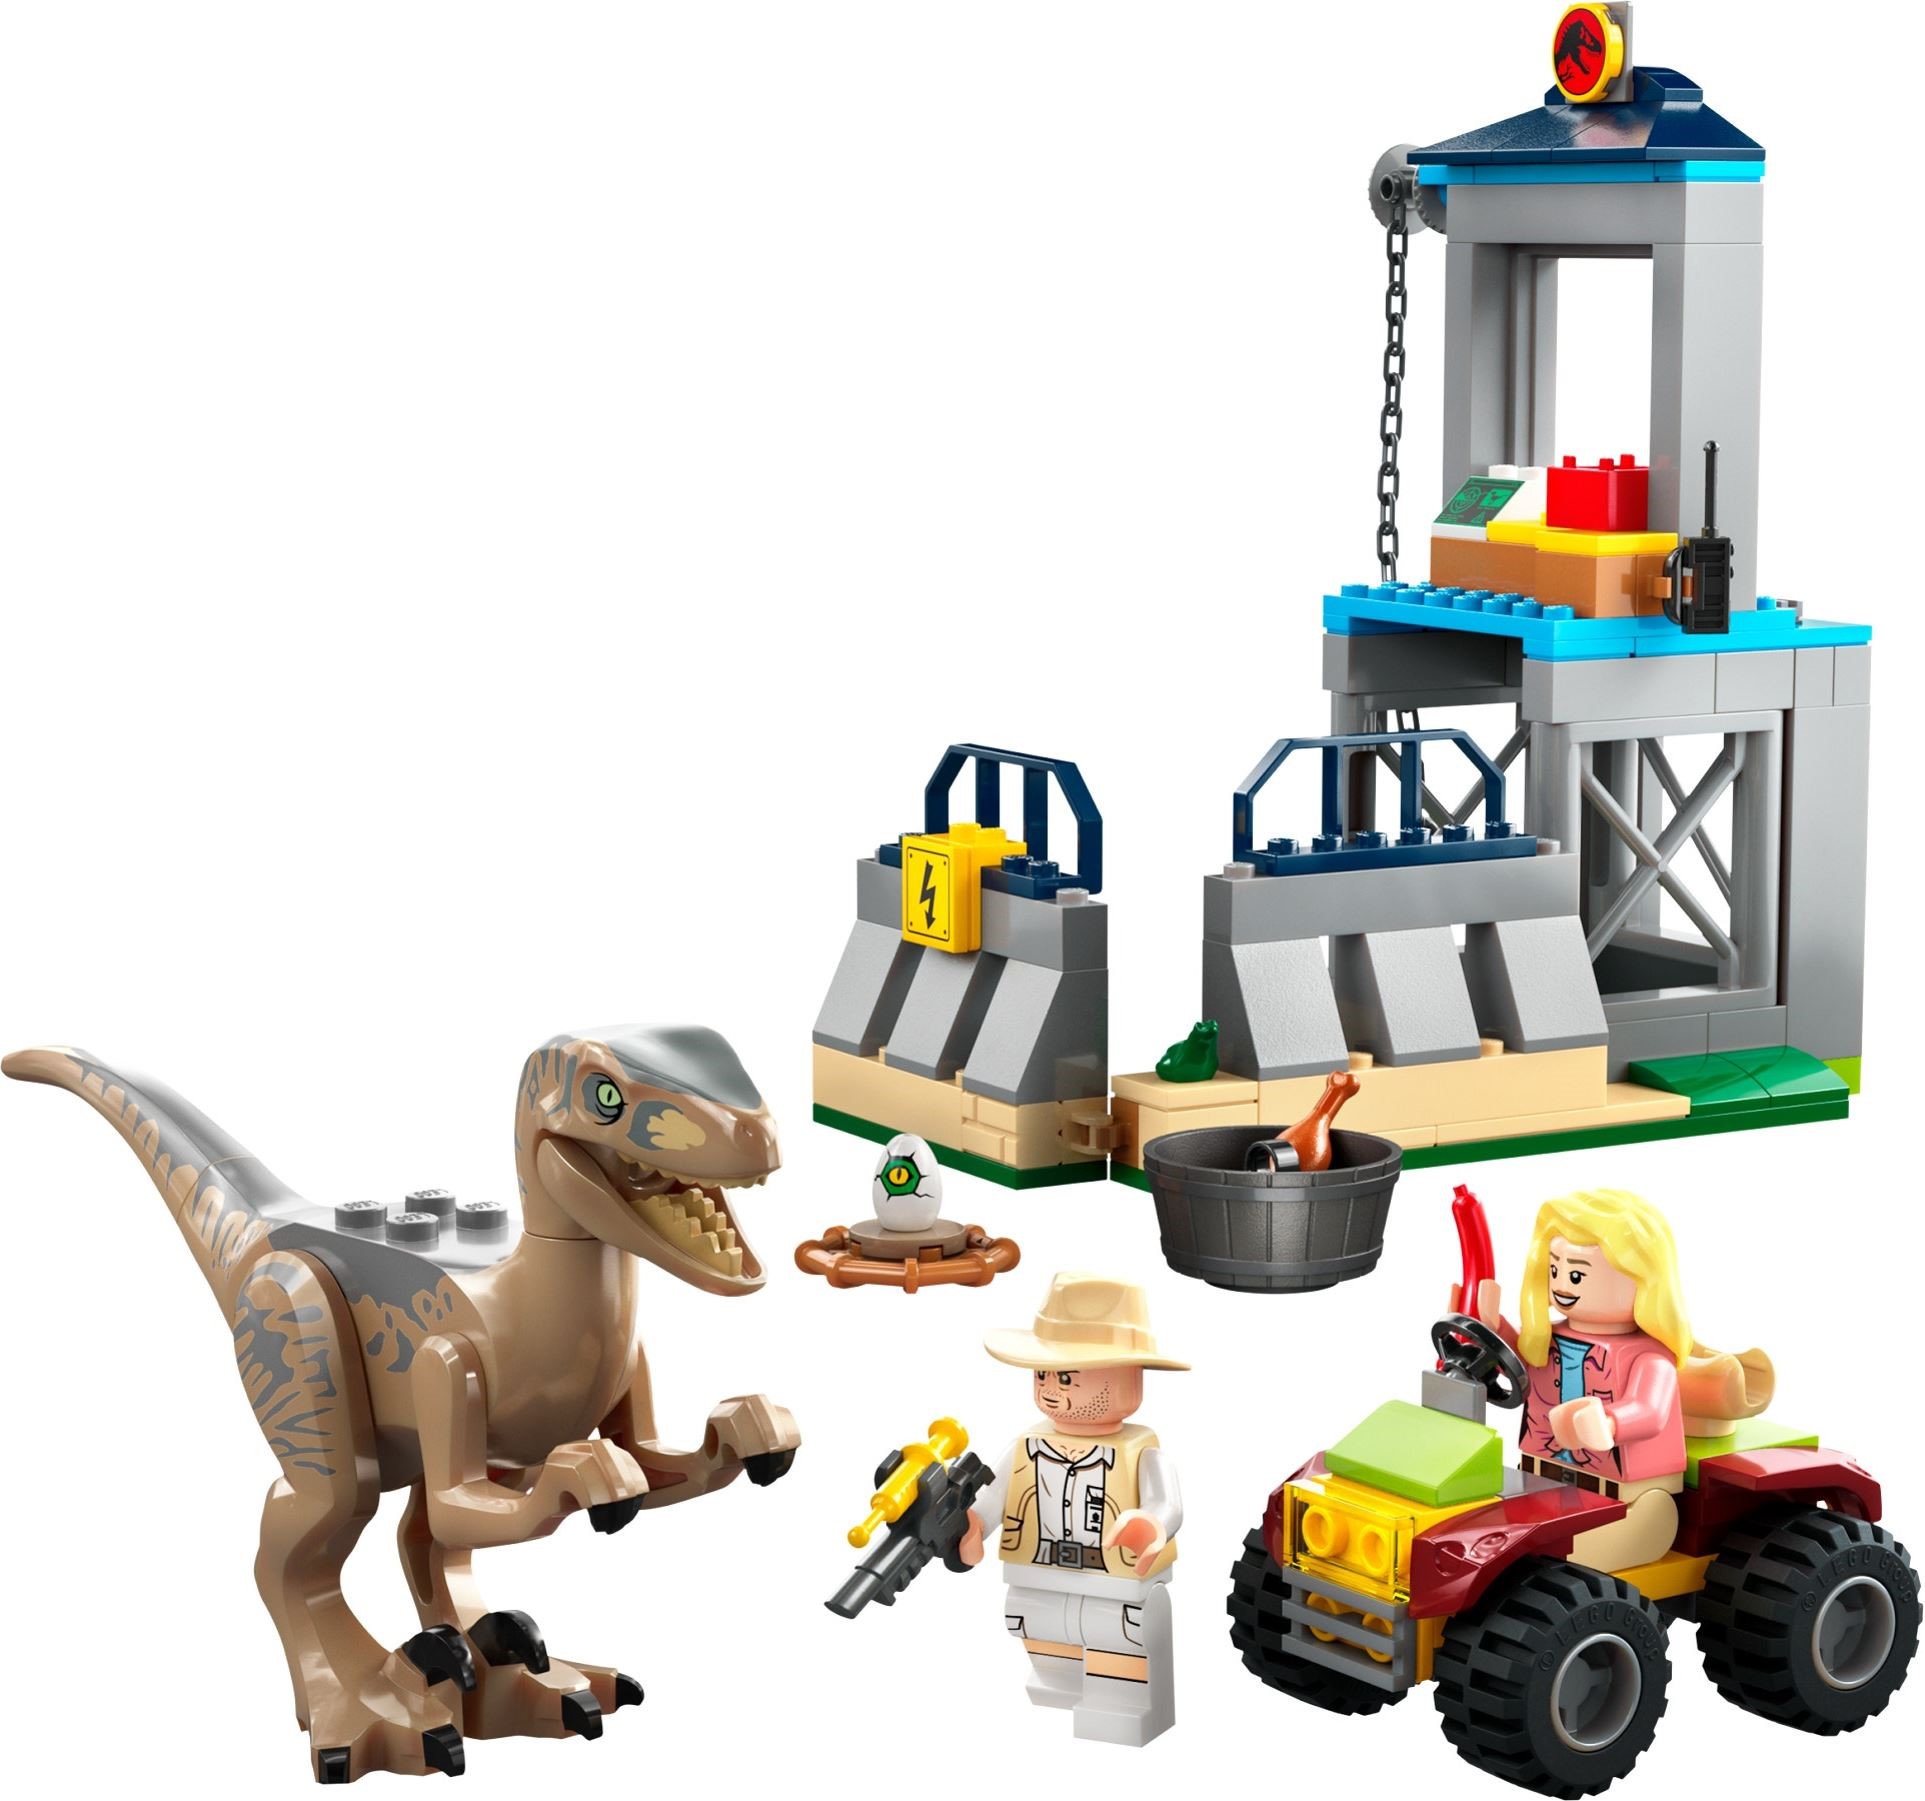 Best Lego Jurassic World sets 2023